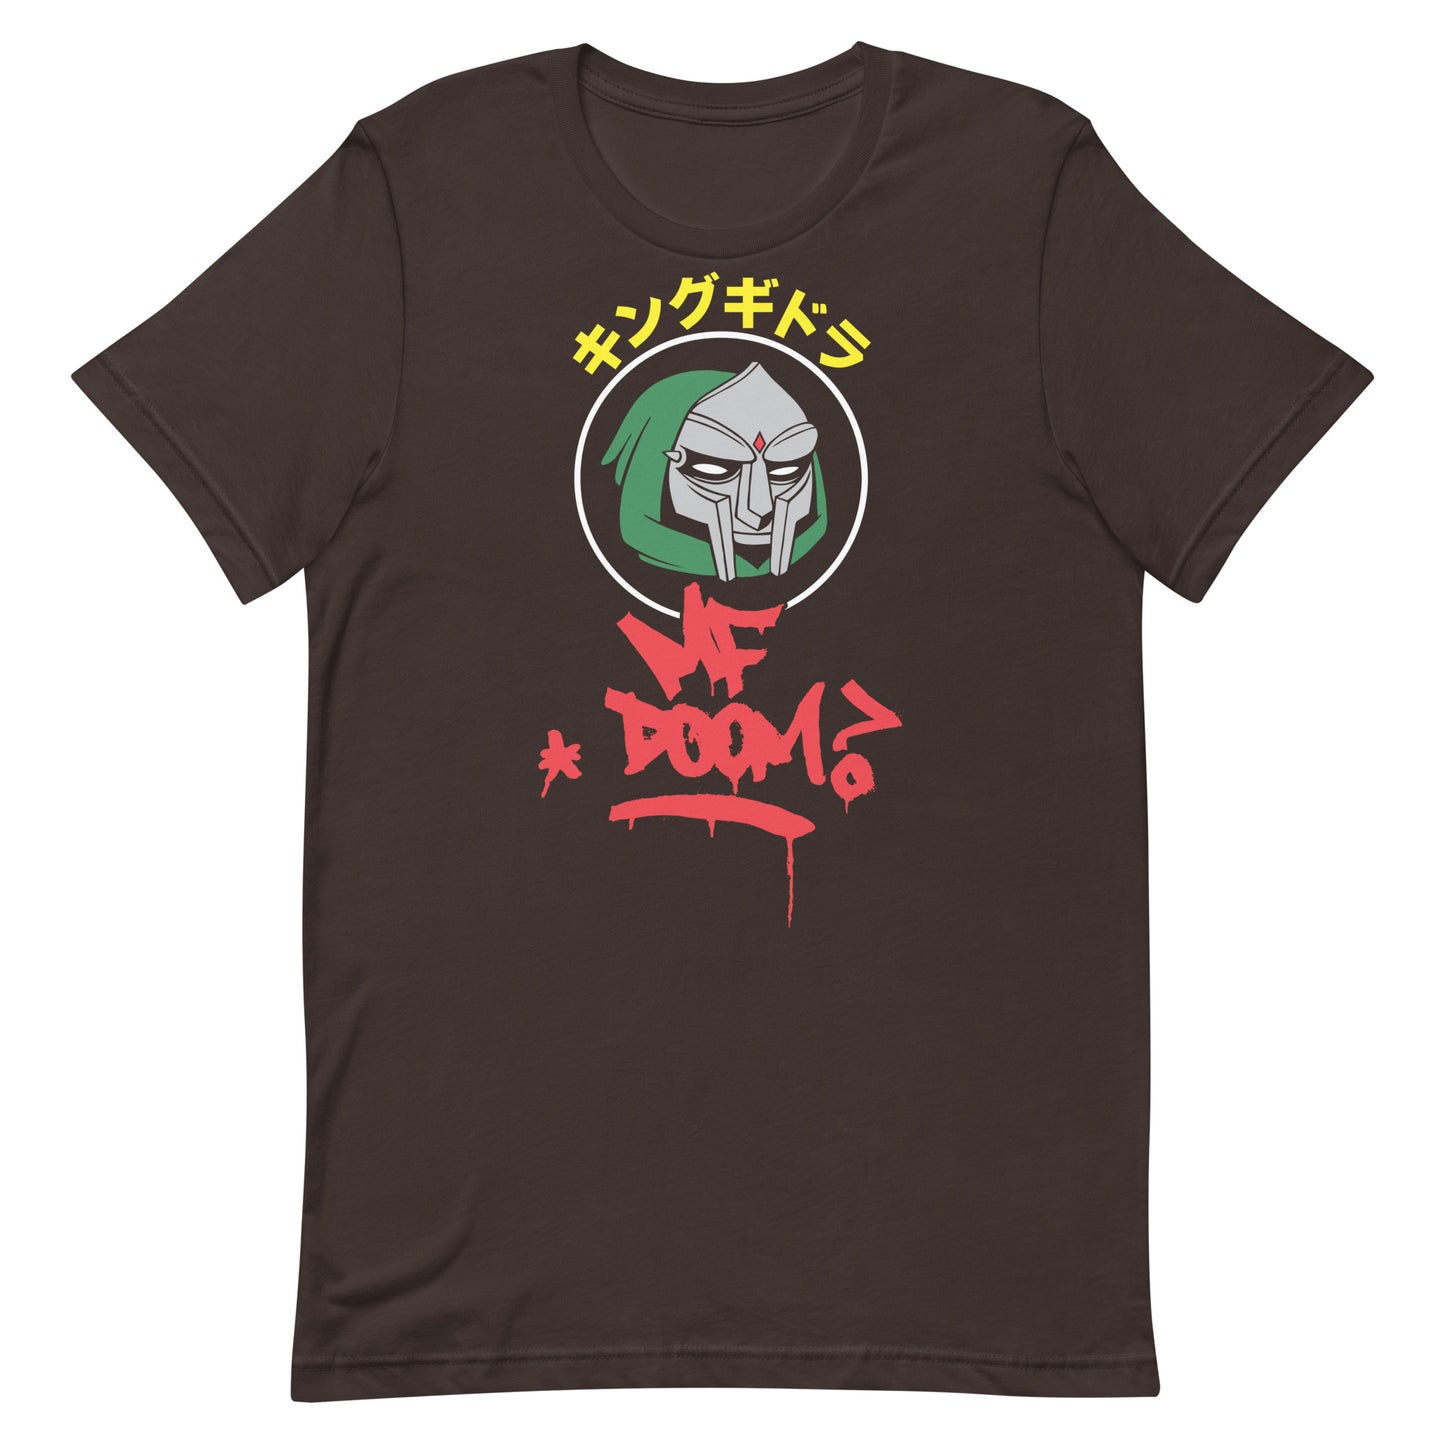 MF DOOM - King Geedorah T-Shirt